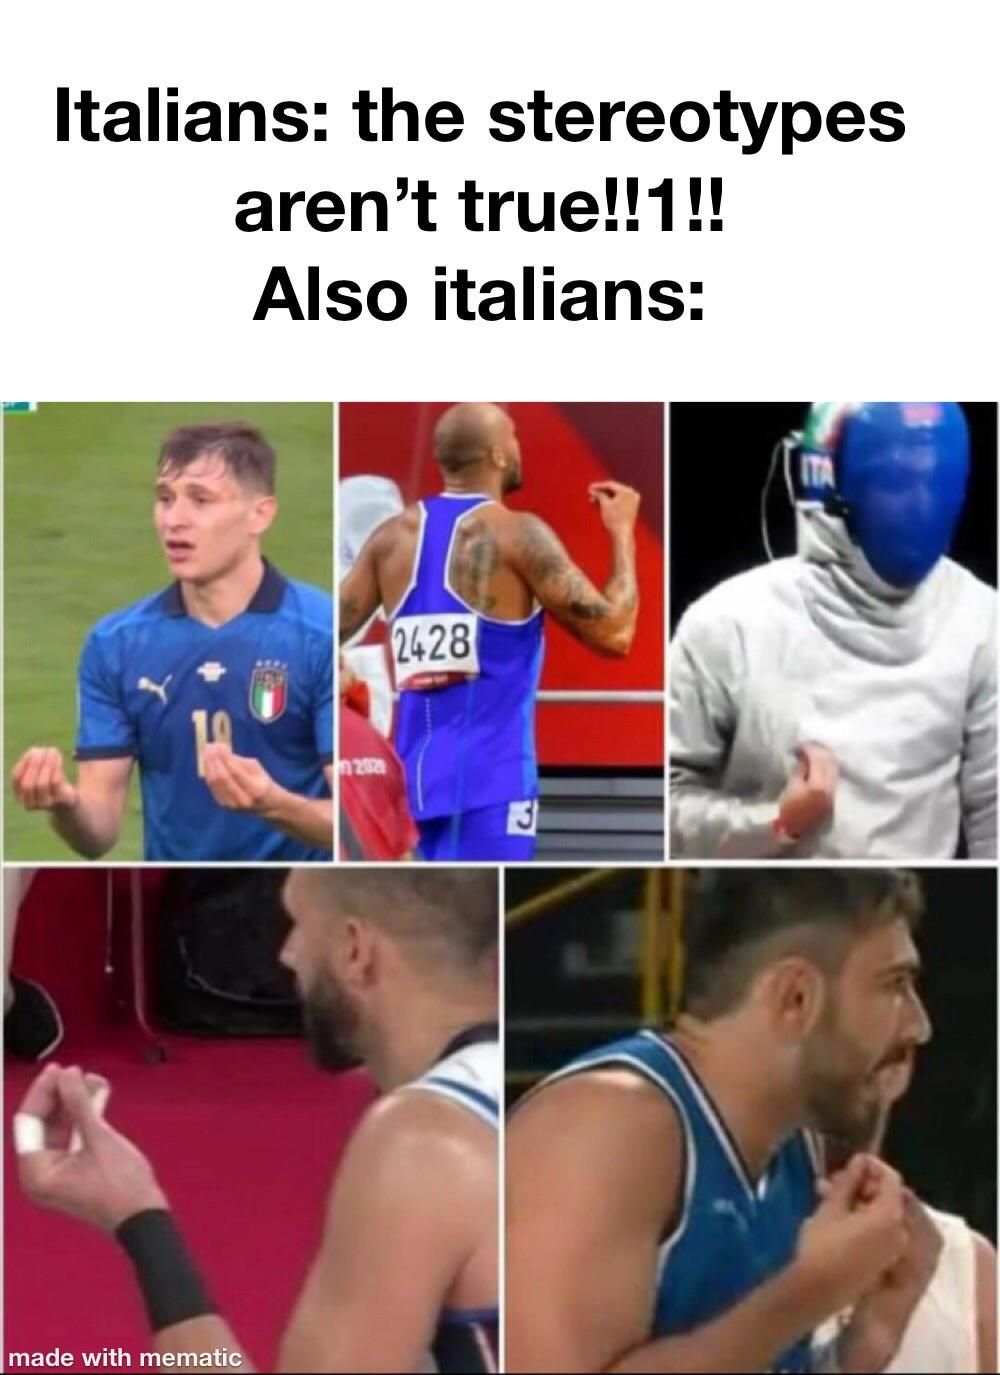 Italians be like: